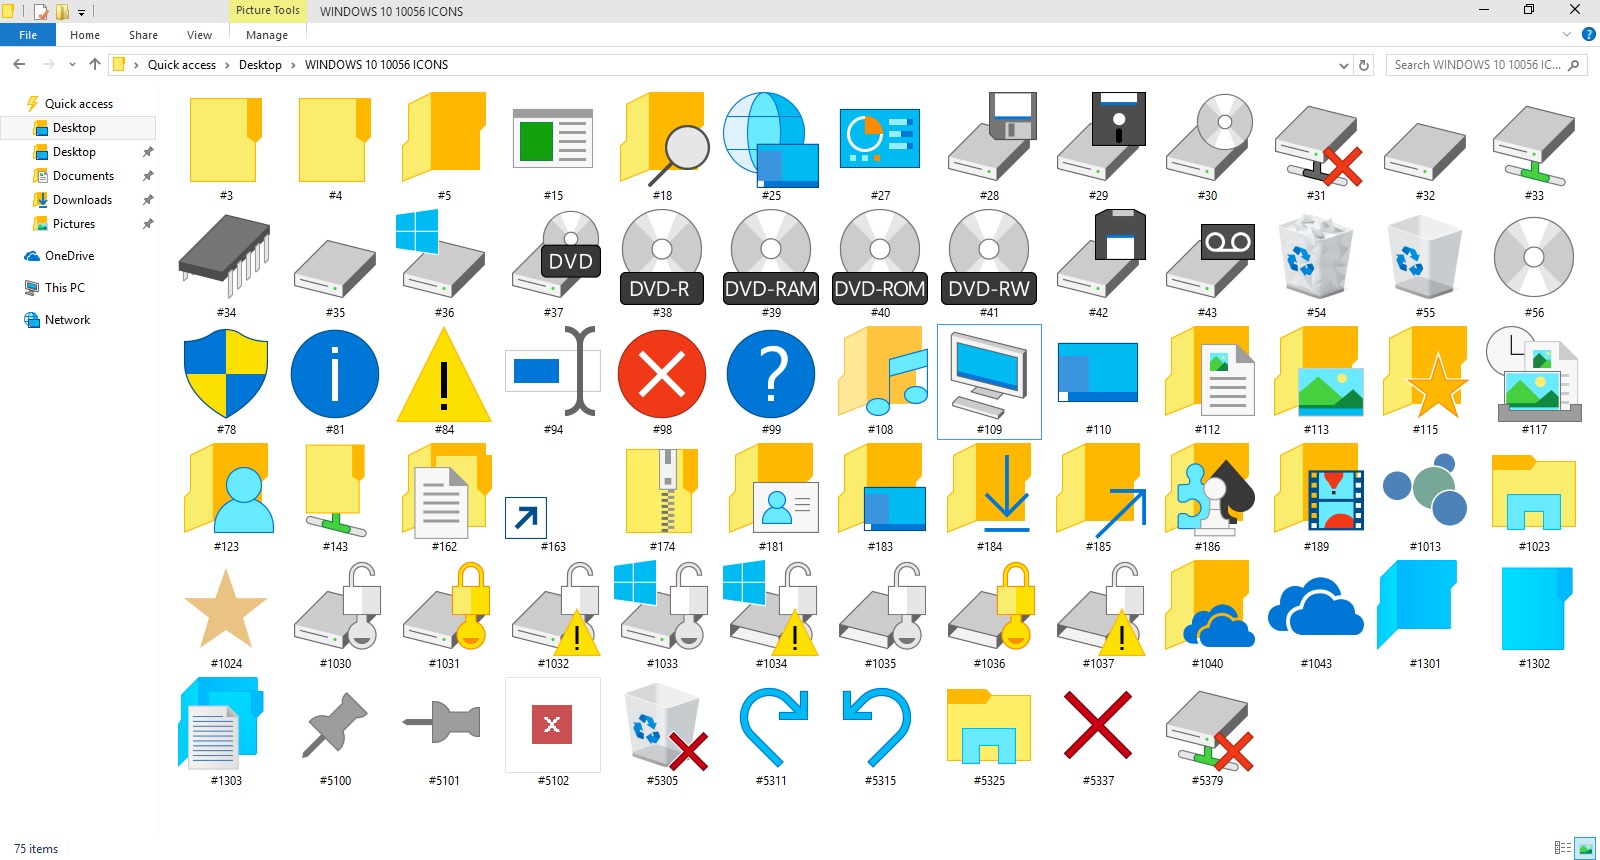 8 Microsoft Windows 10 Icons Images